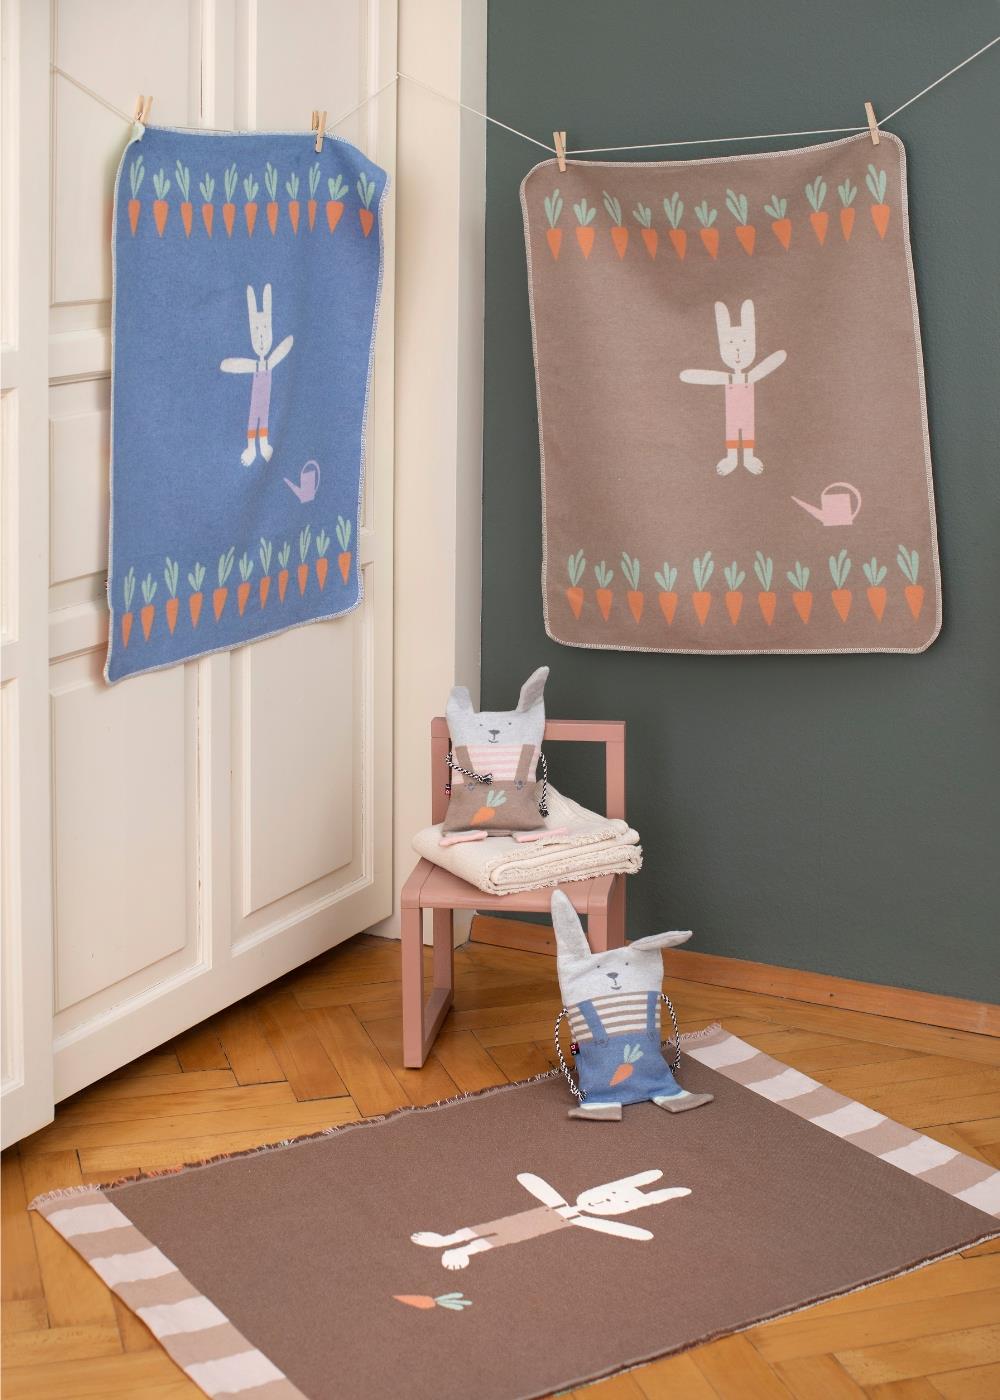 David Fussenegger Baumwolldecke für Babys "Hase" in blau